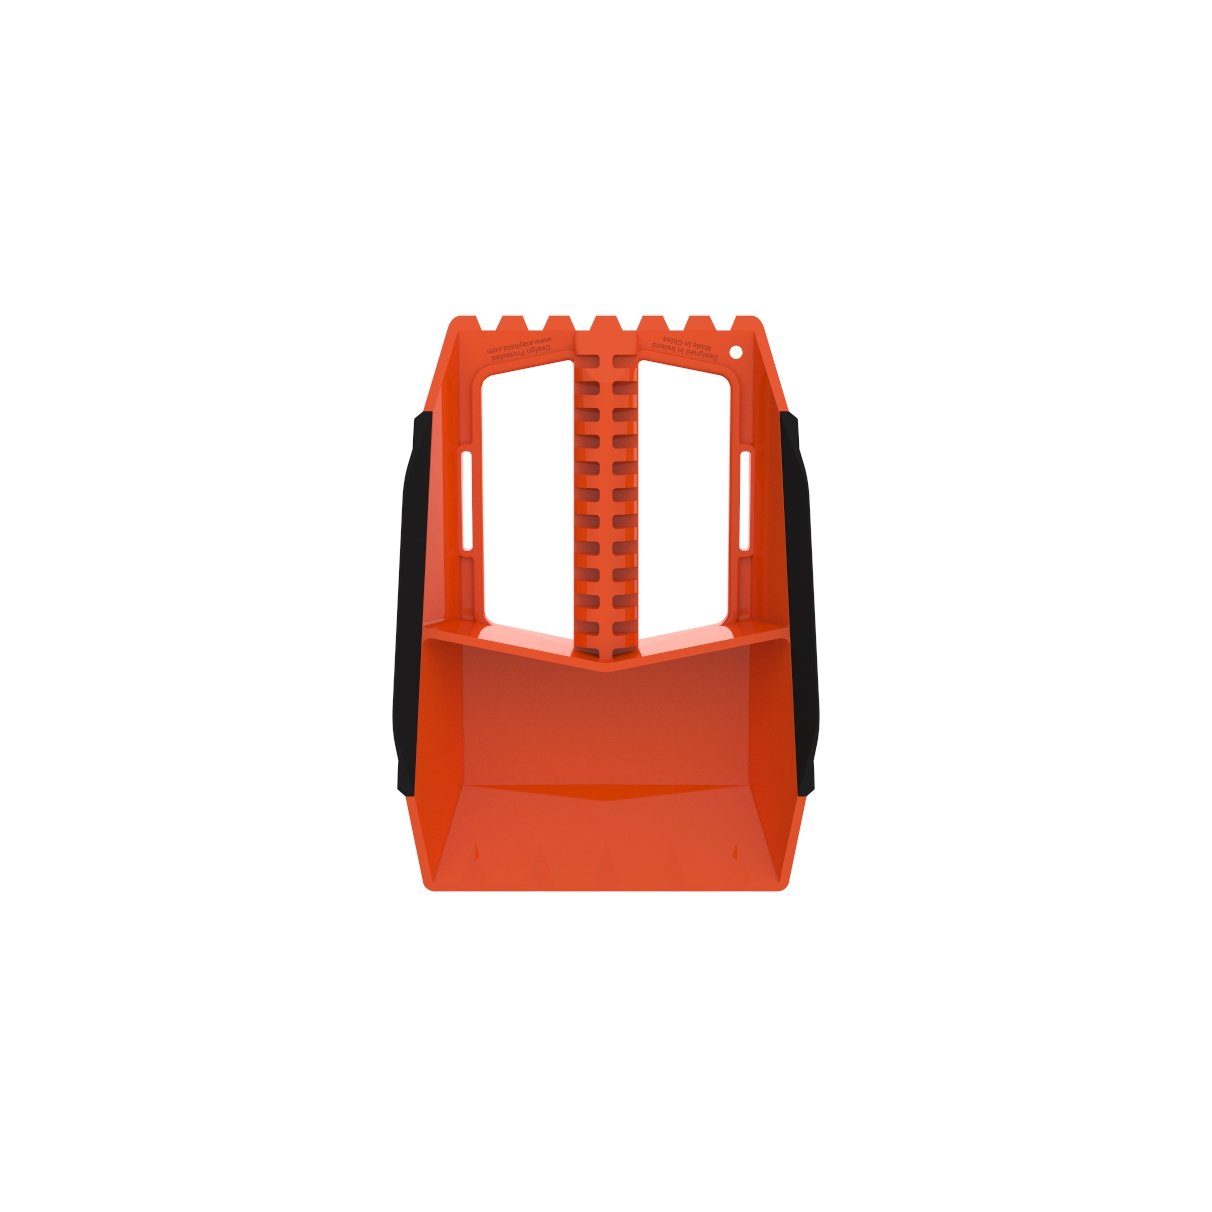 Stayhold Compact Safety Shovel - Mini underside